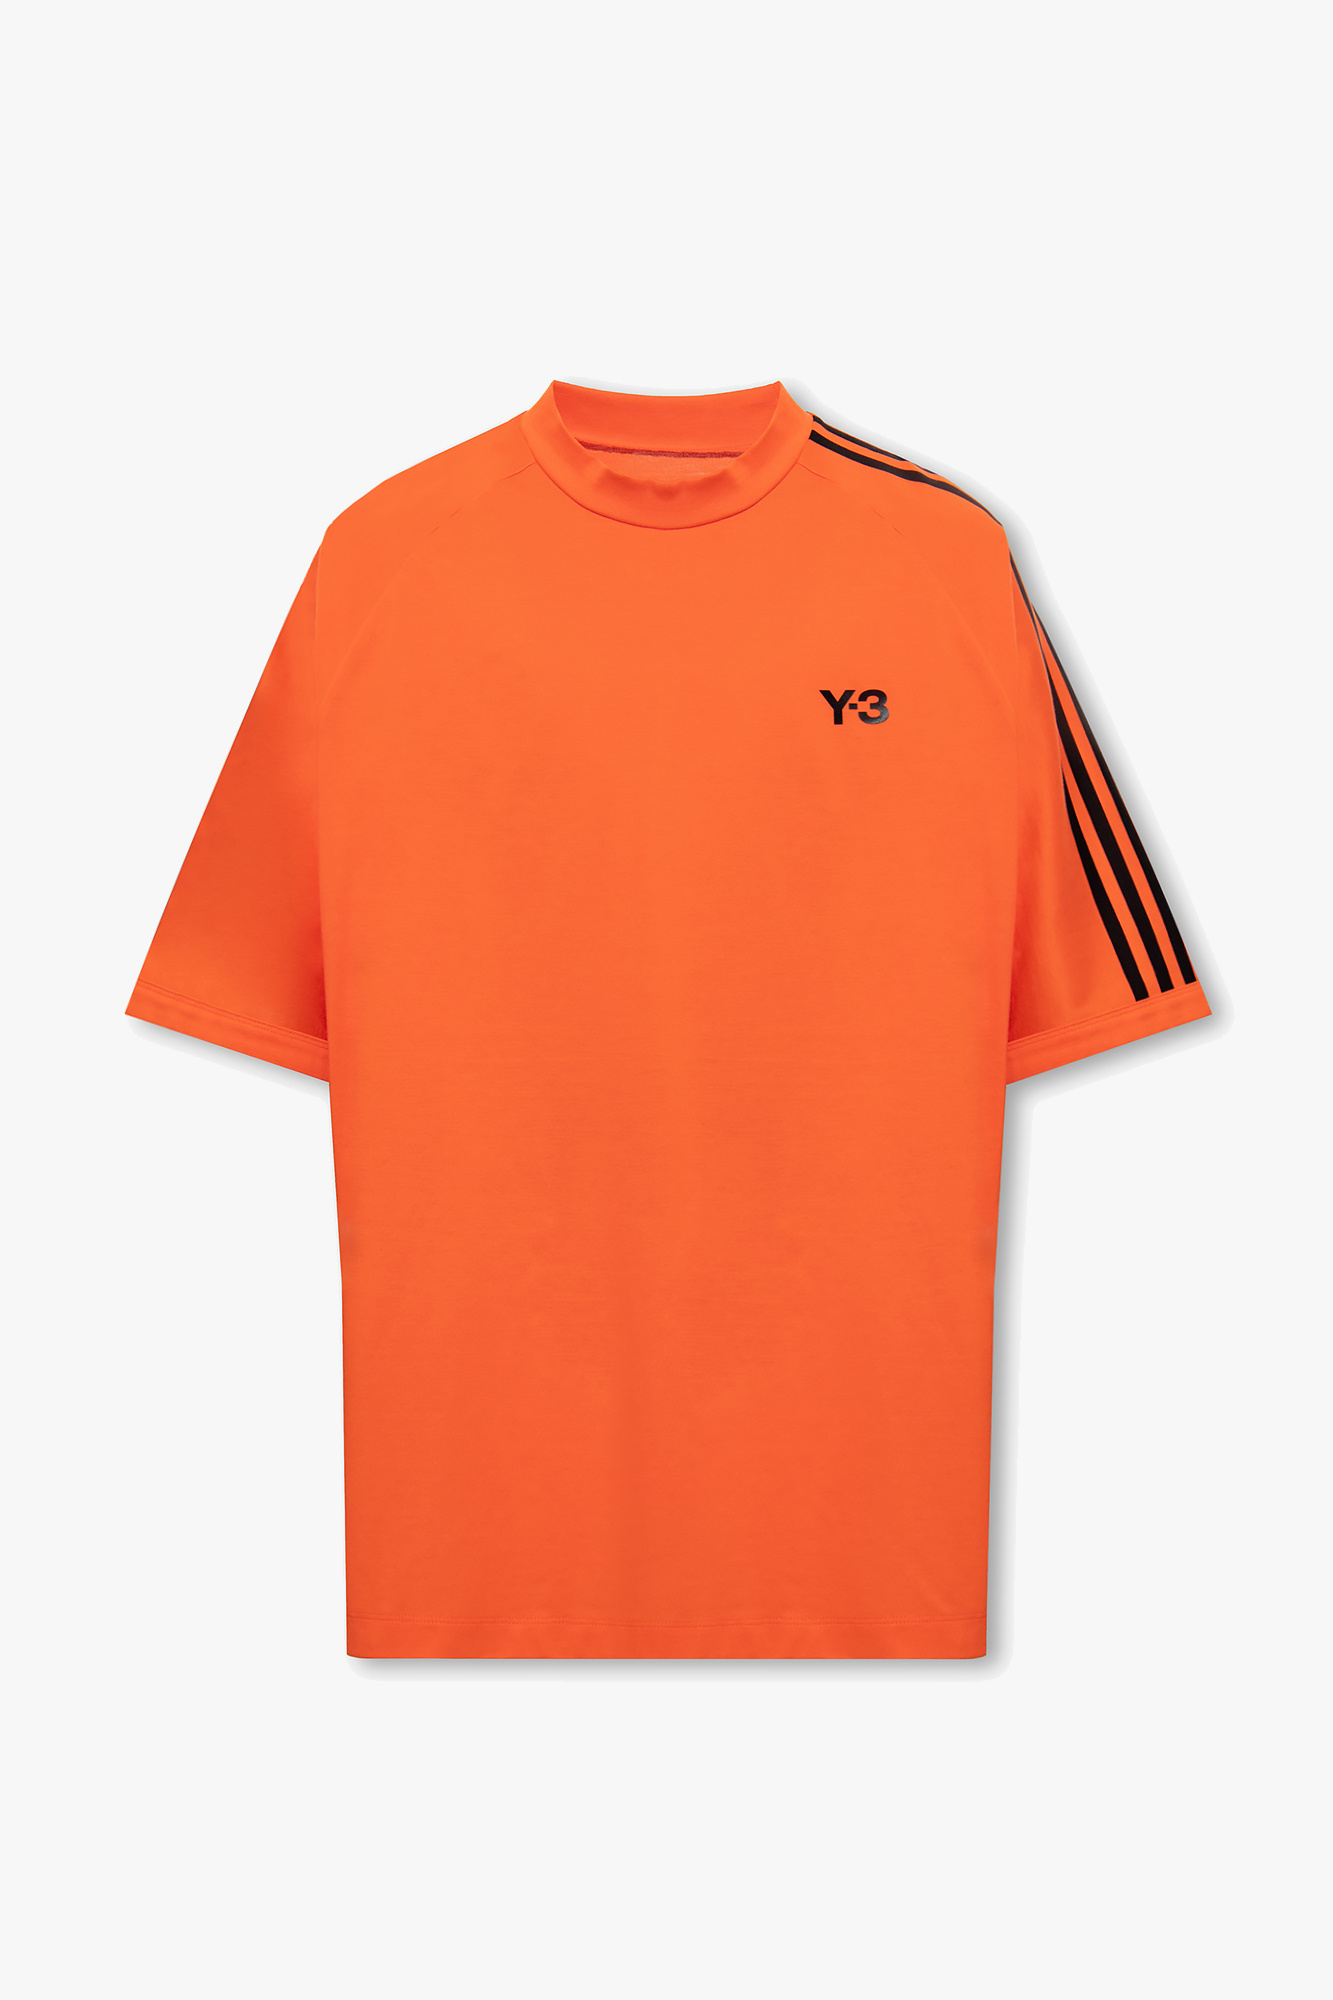 Orange T-shirt with logo Y-3 Yohji Yamamoto - Vitkac Canada